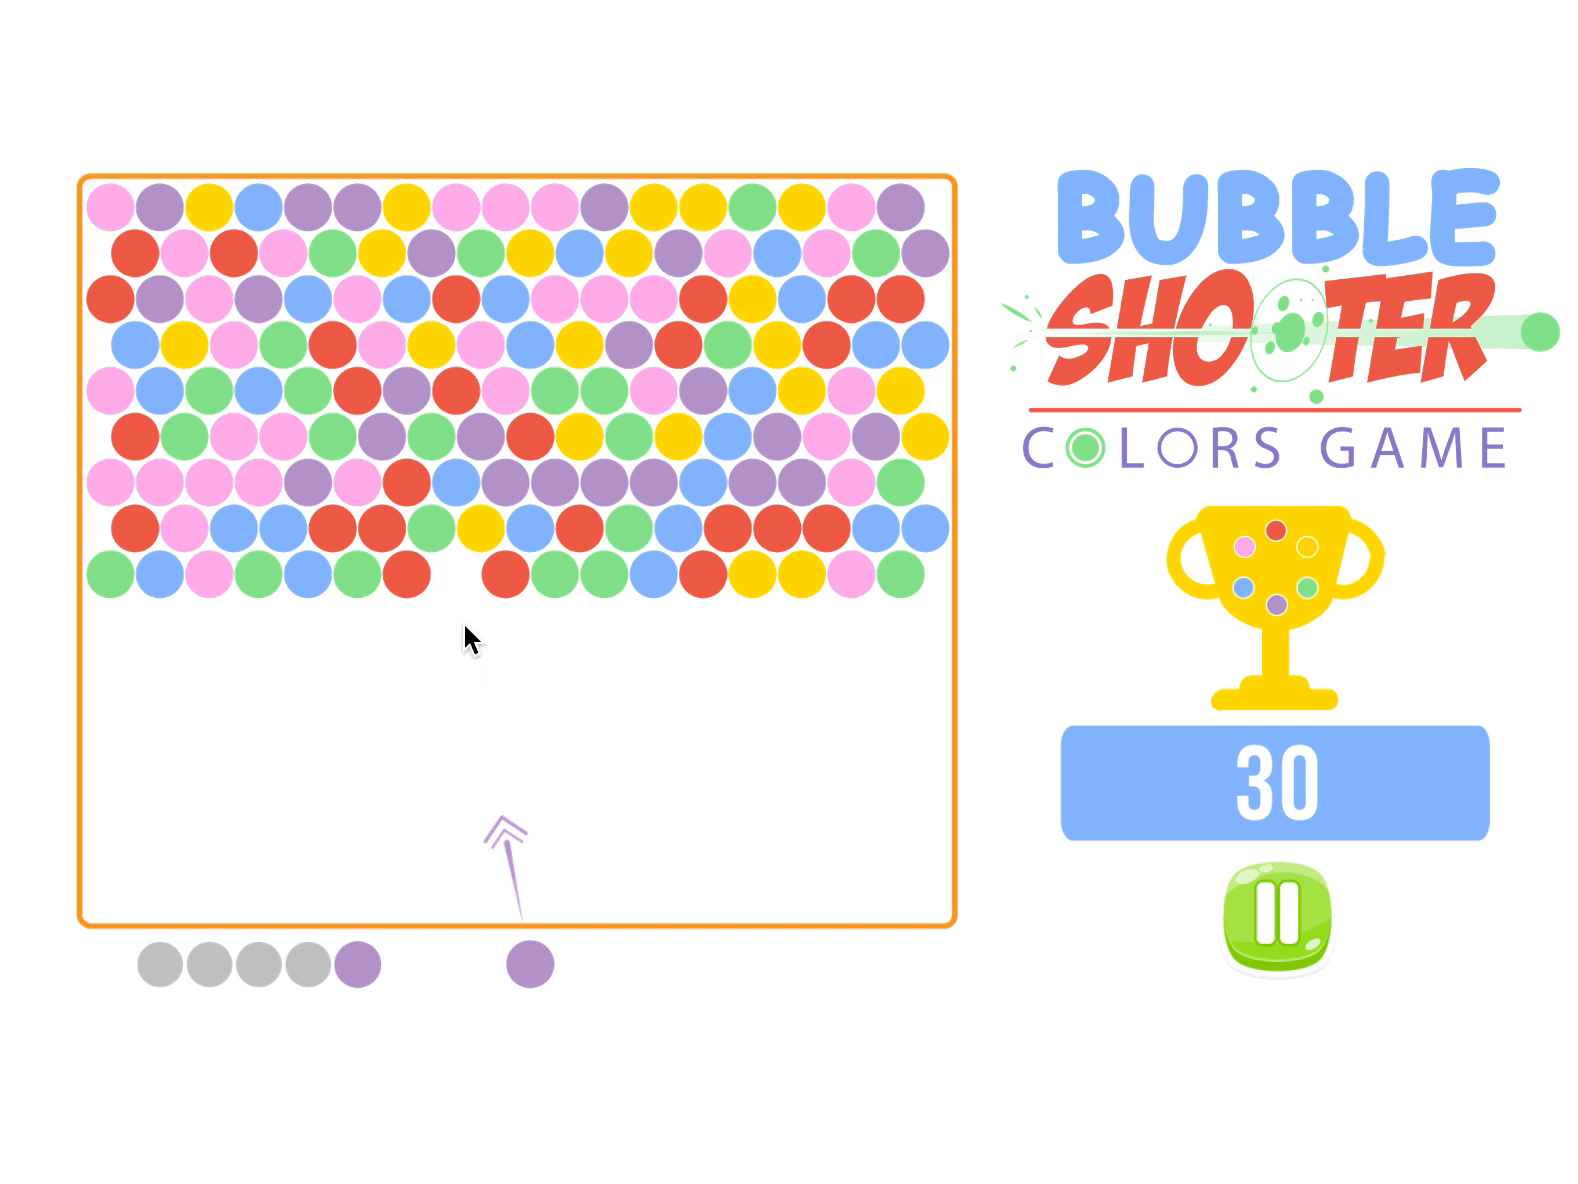 Bubble Shooter Colors Game Screenshot 10